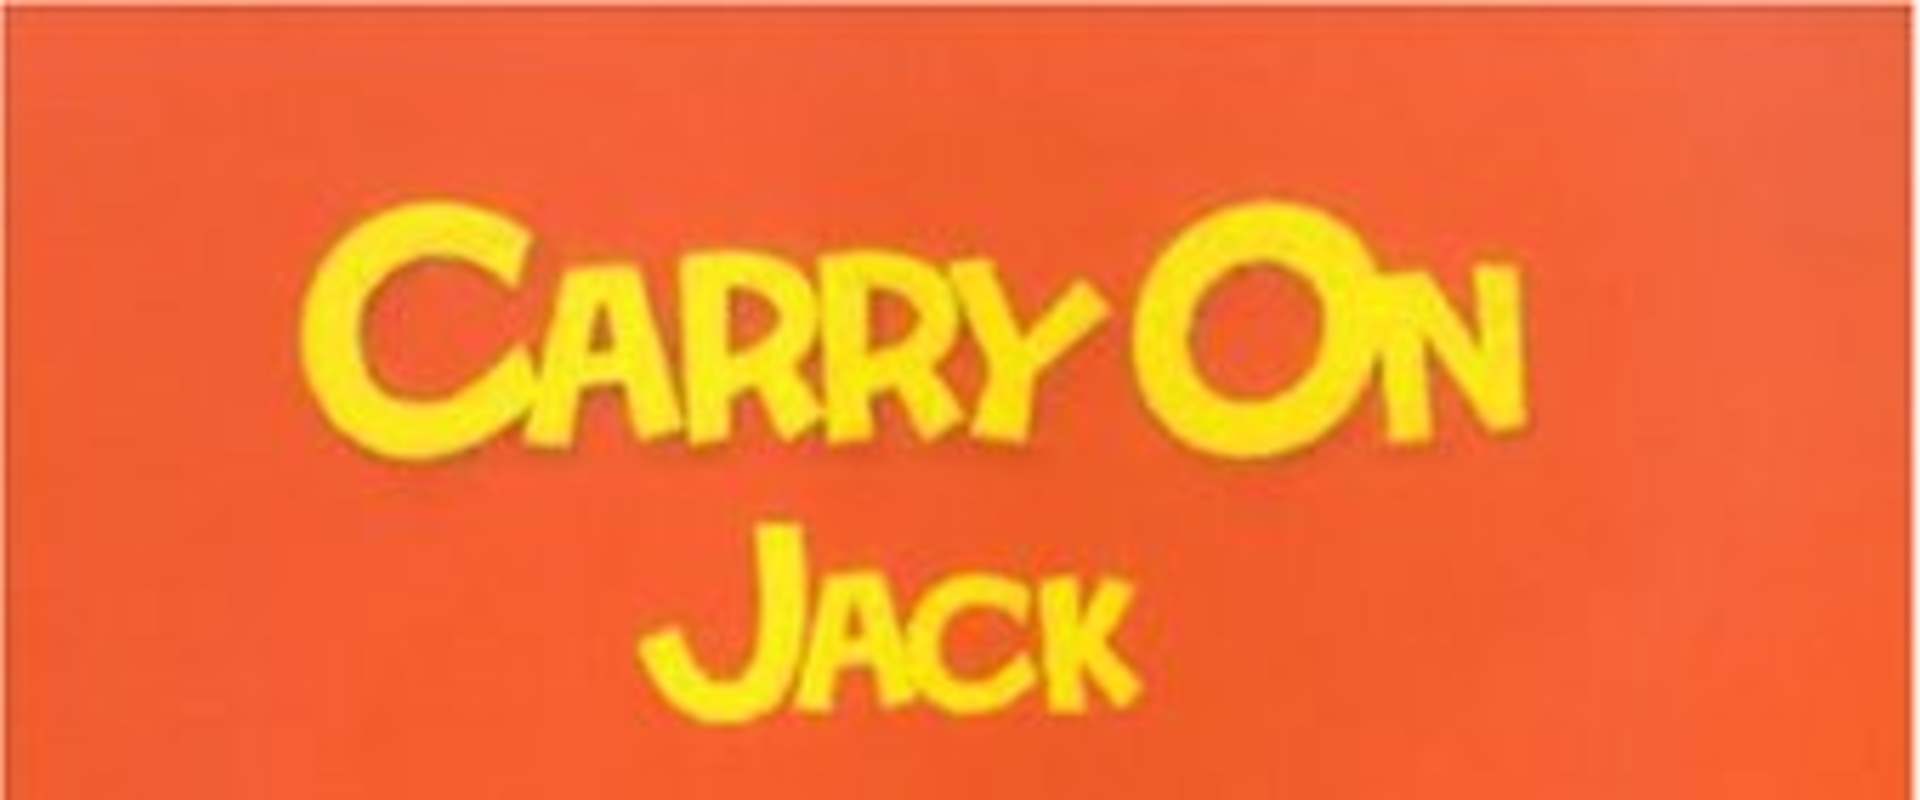 Carry on Jack background 1